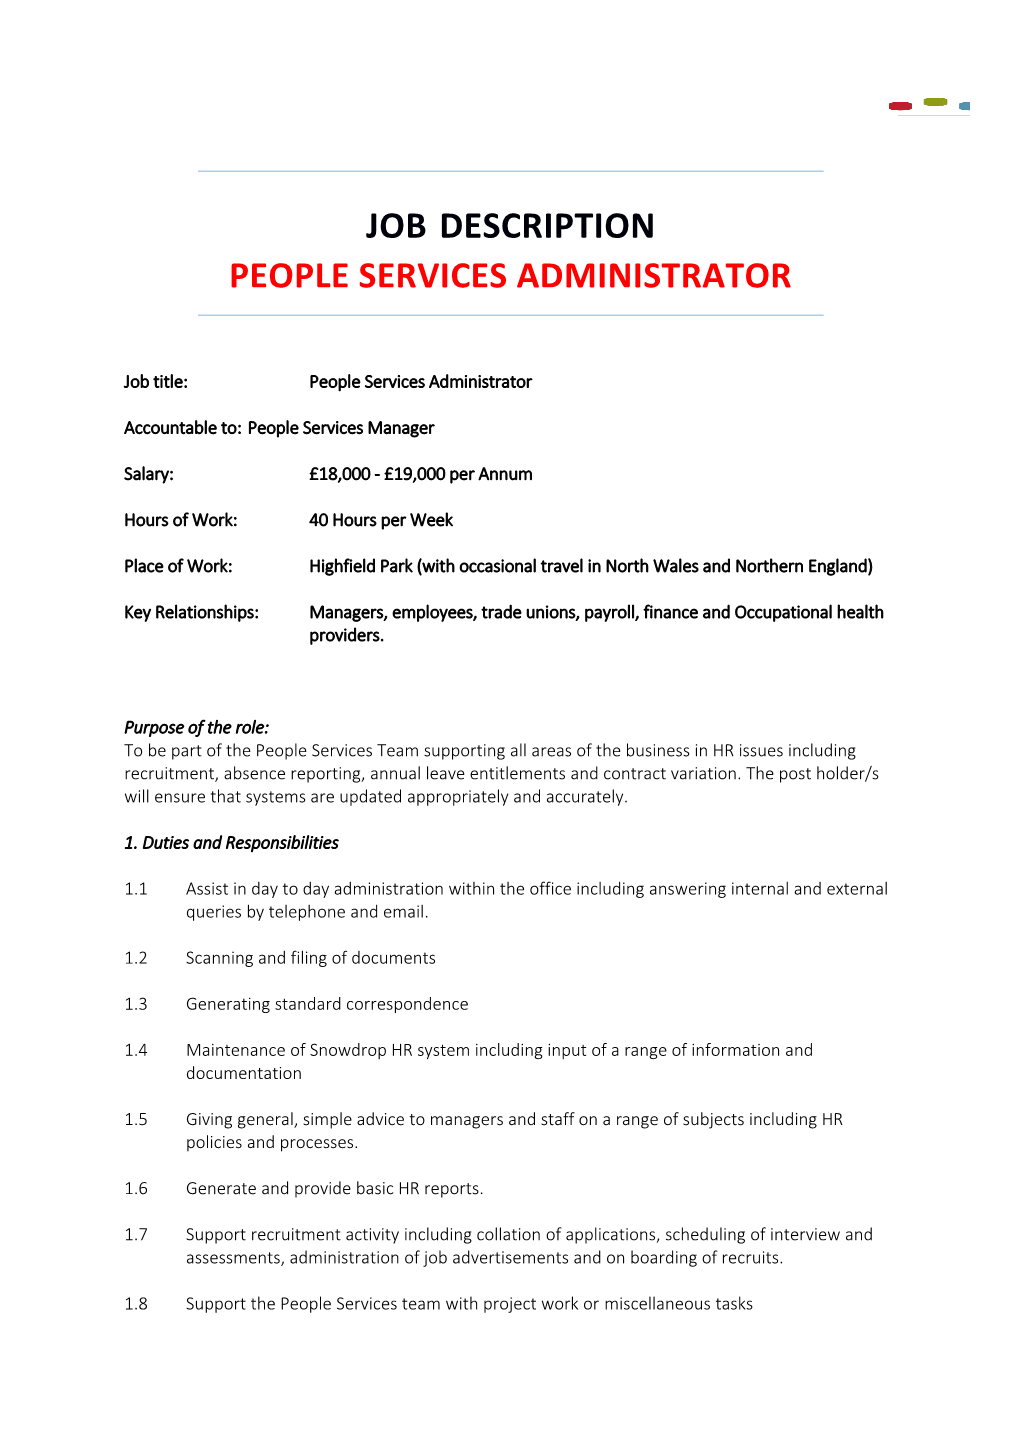 Job Description PEOPLE SERVICES ADMINISTRATOR